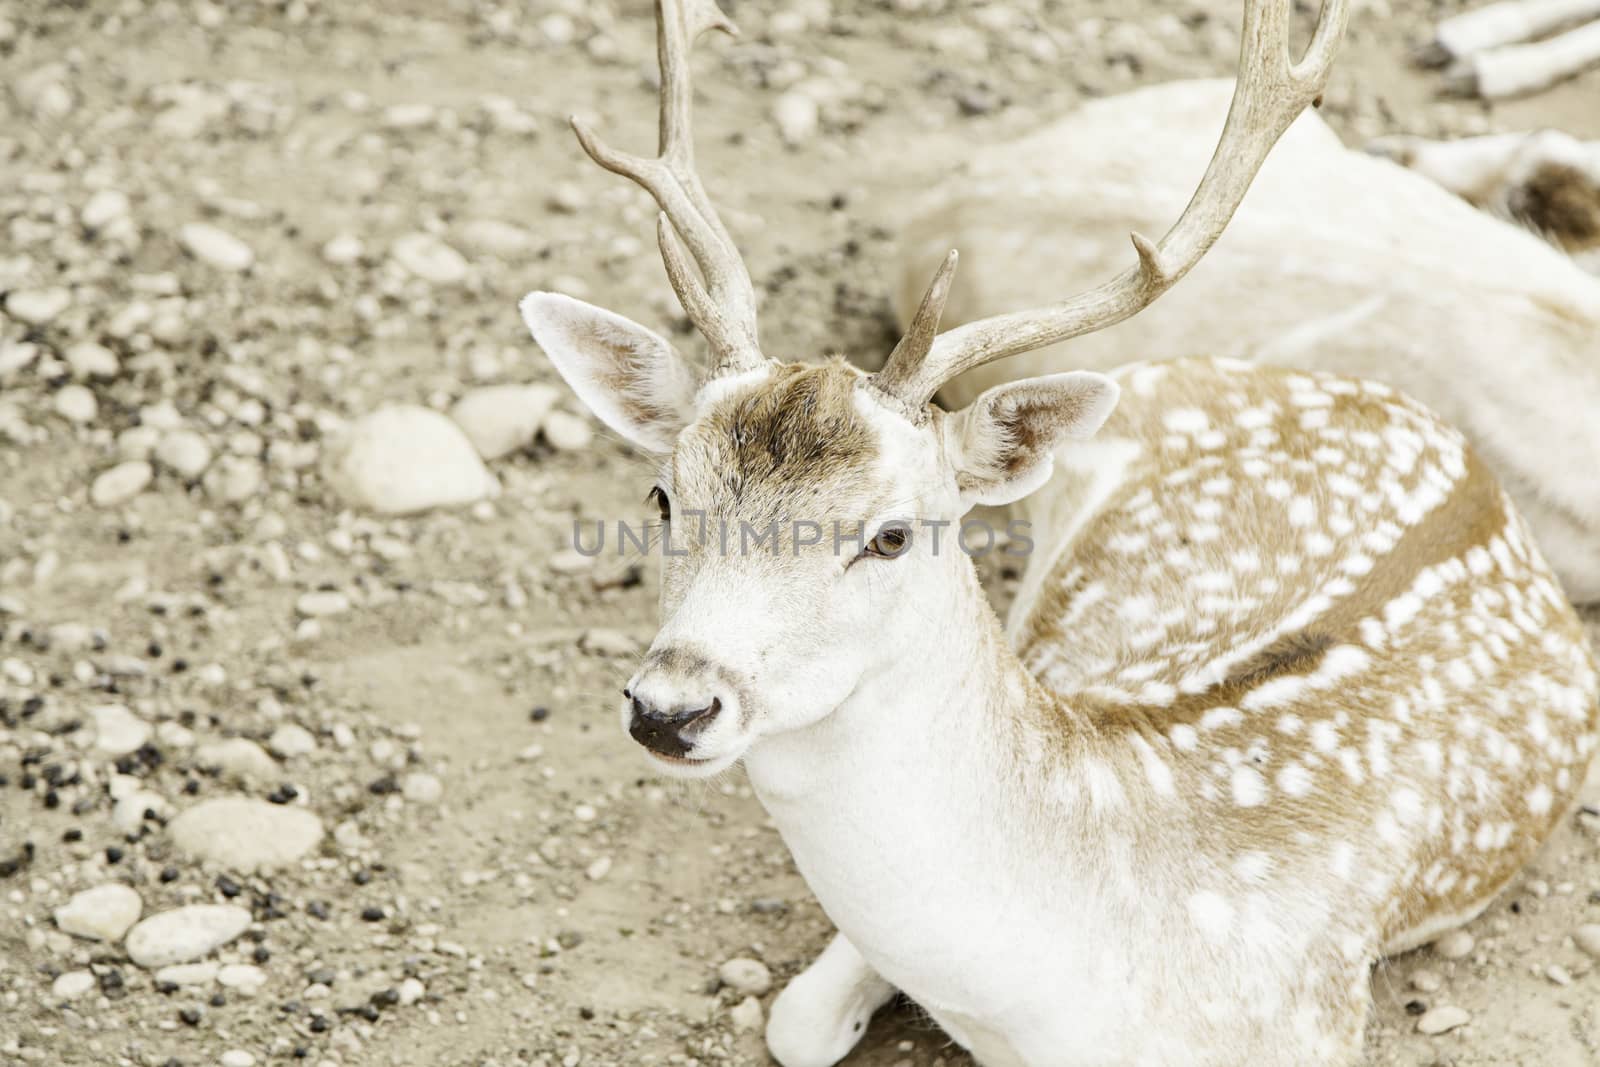 Deer in nature, detail of mammals